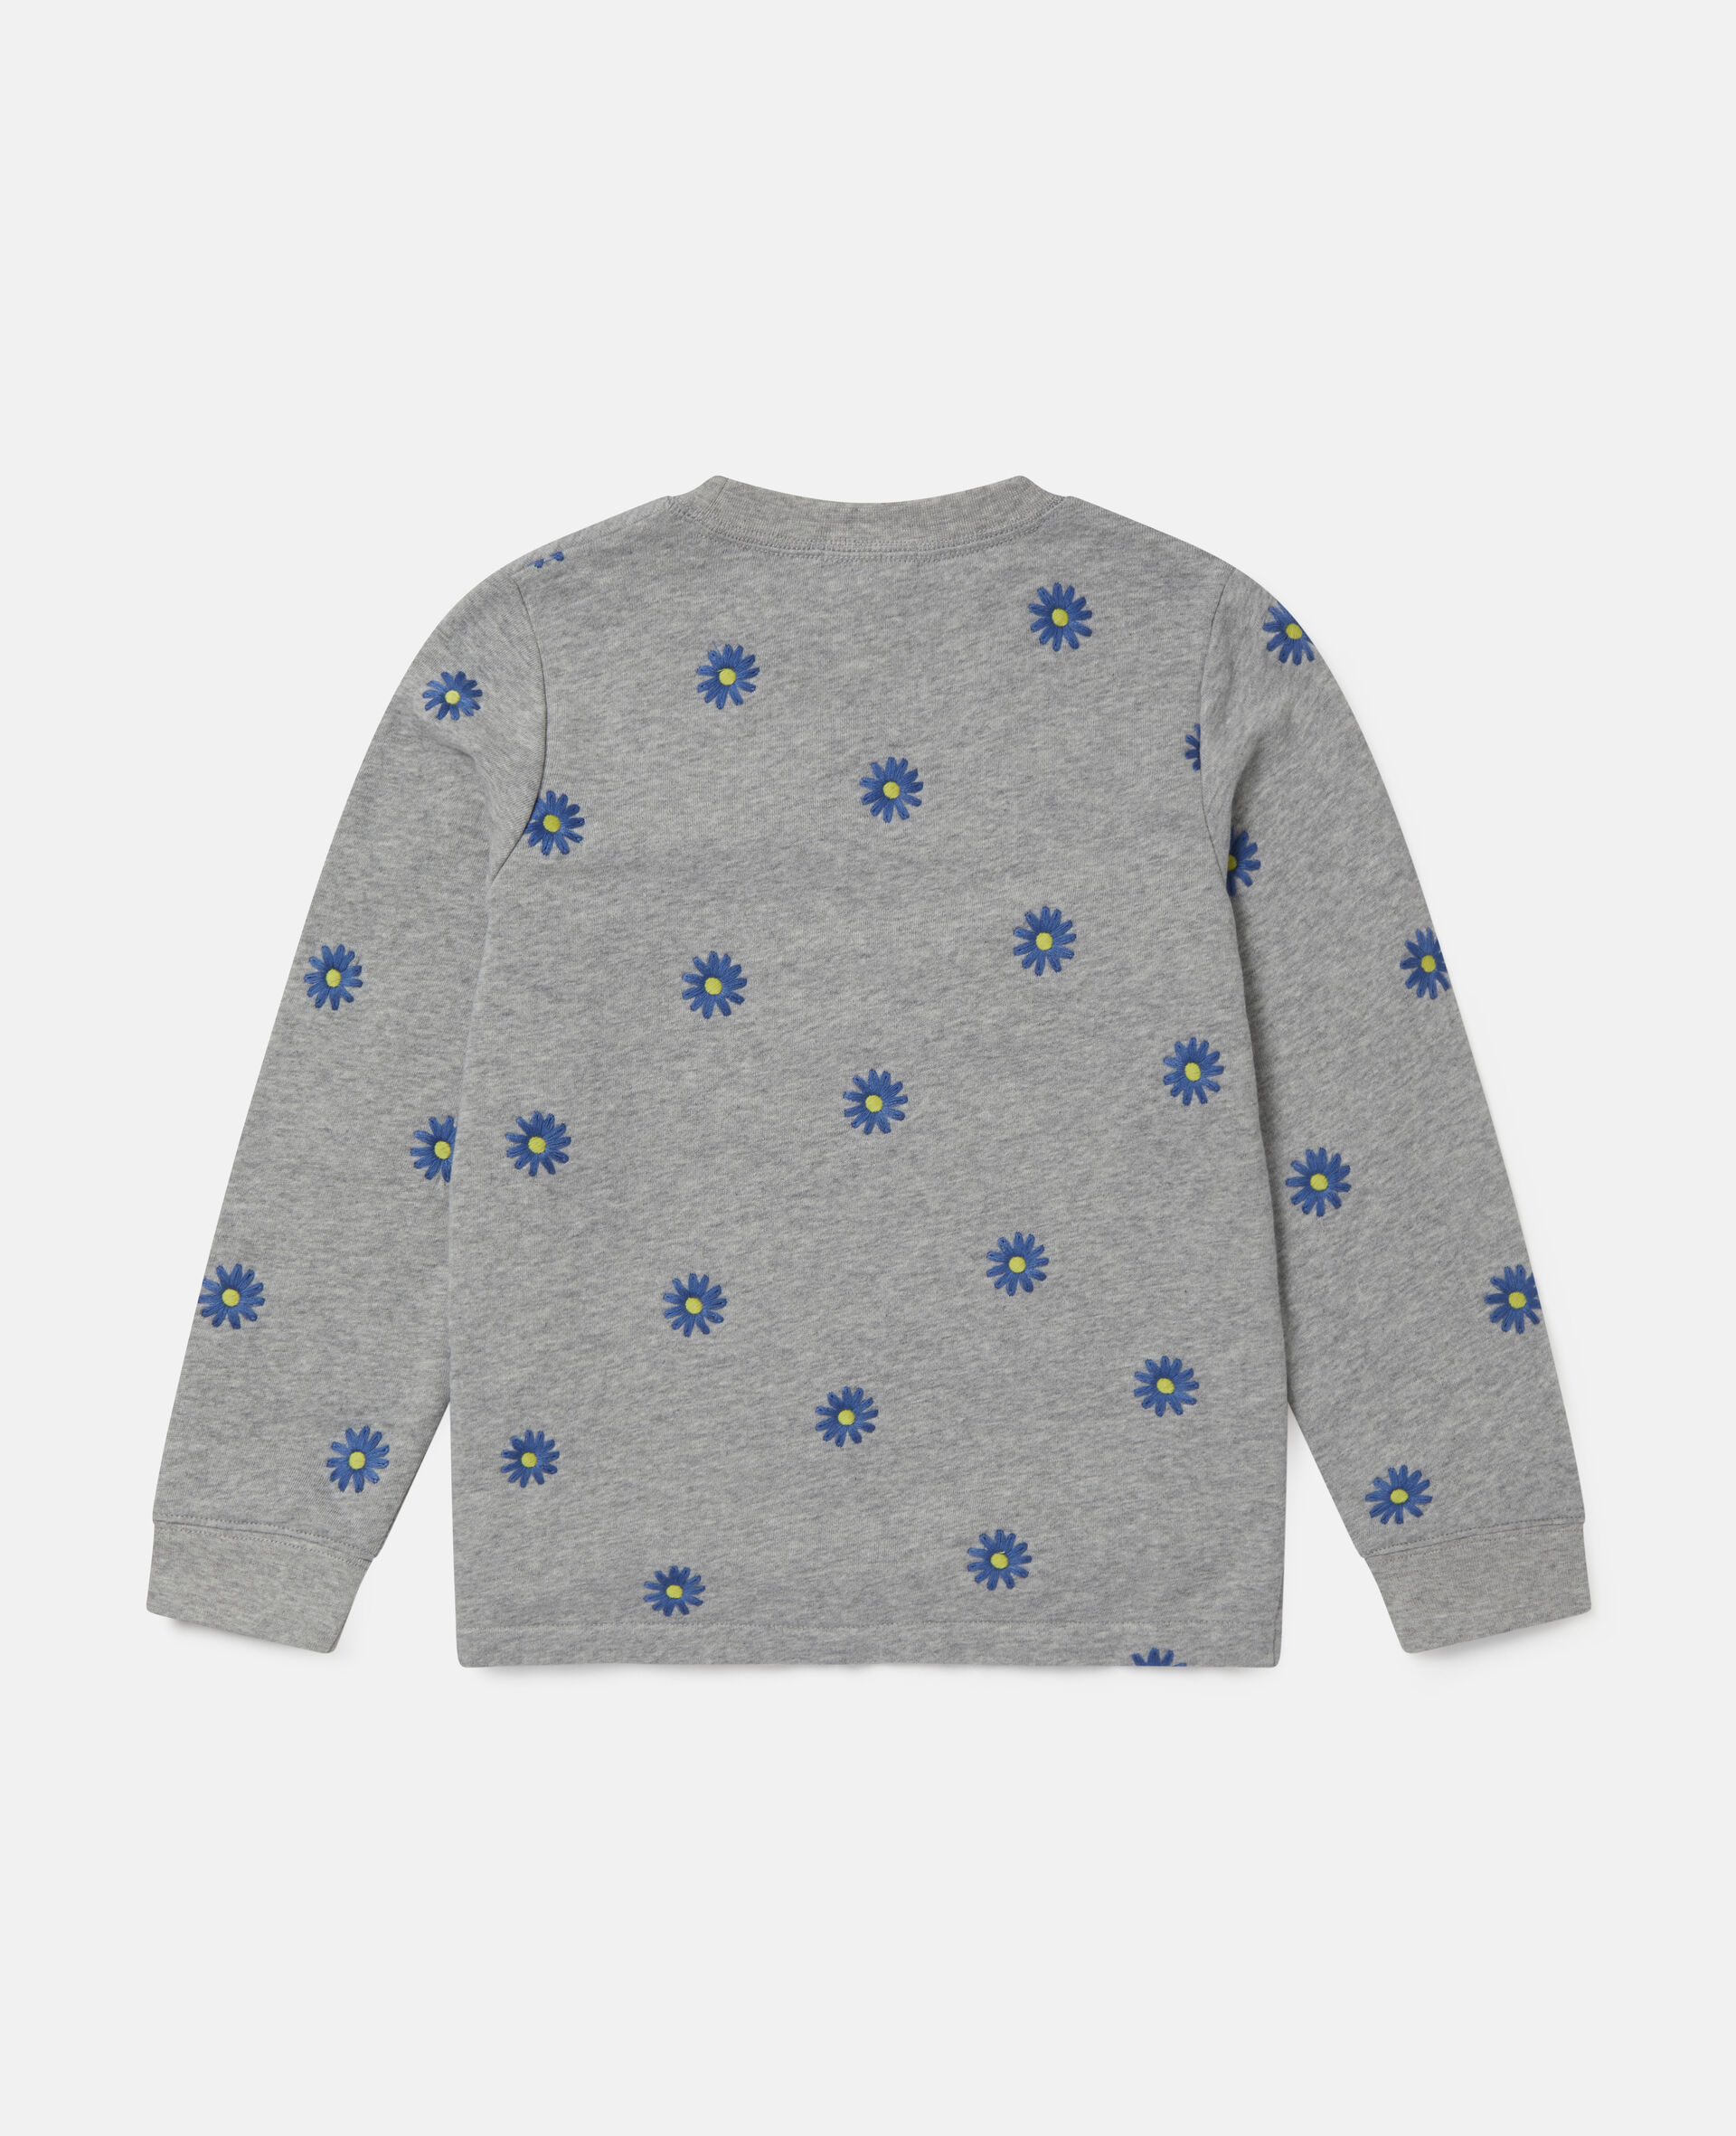 Embroidered Daisies Cotton Fleece Sweatshirt -Grey-large image number 3